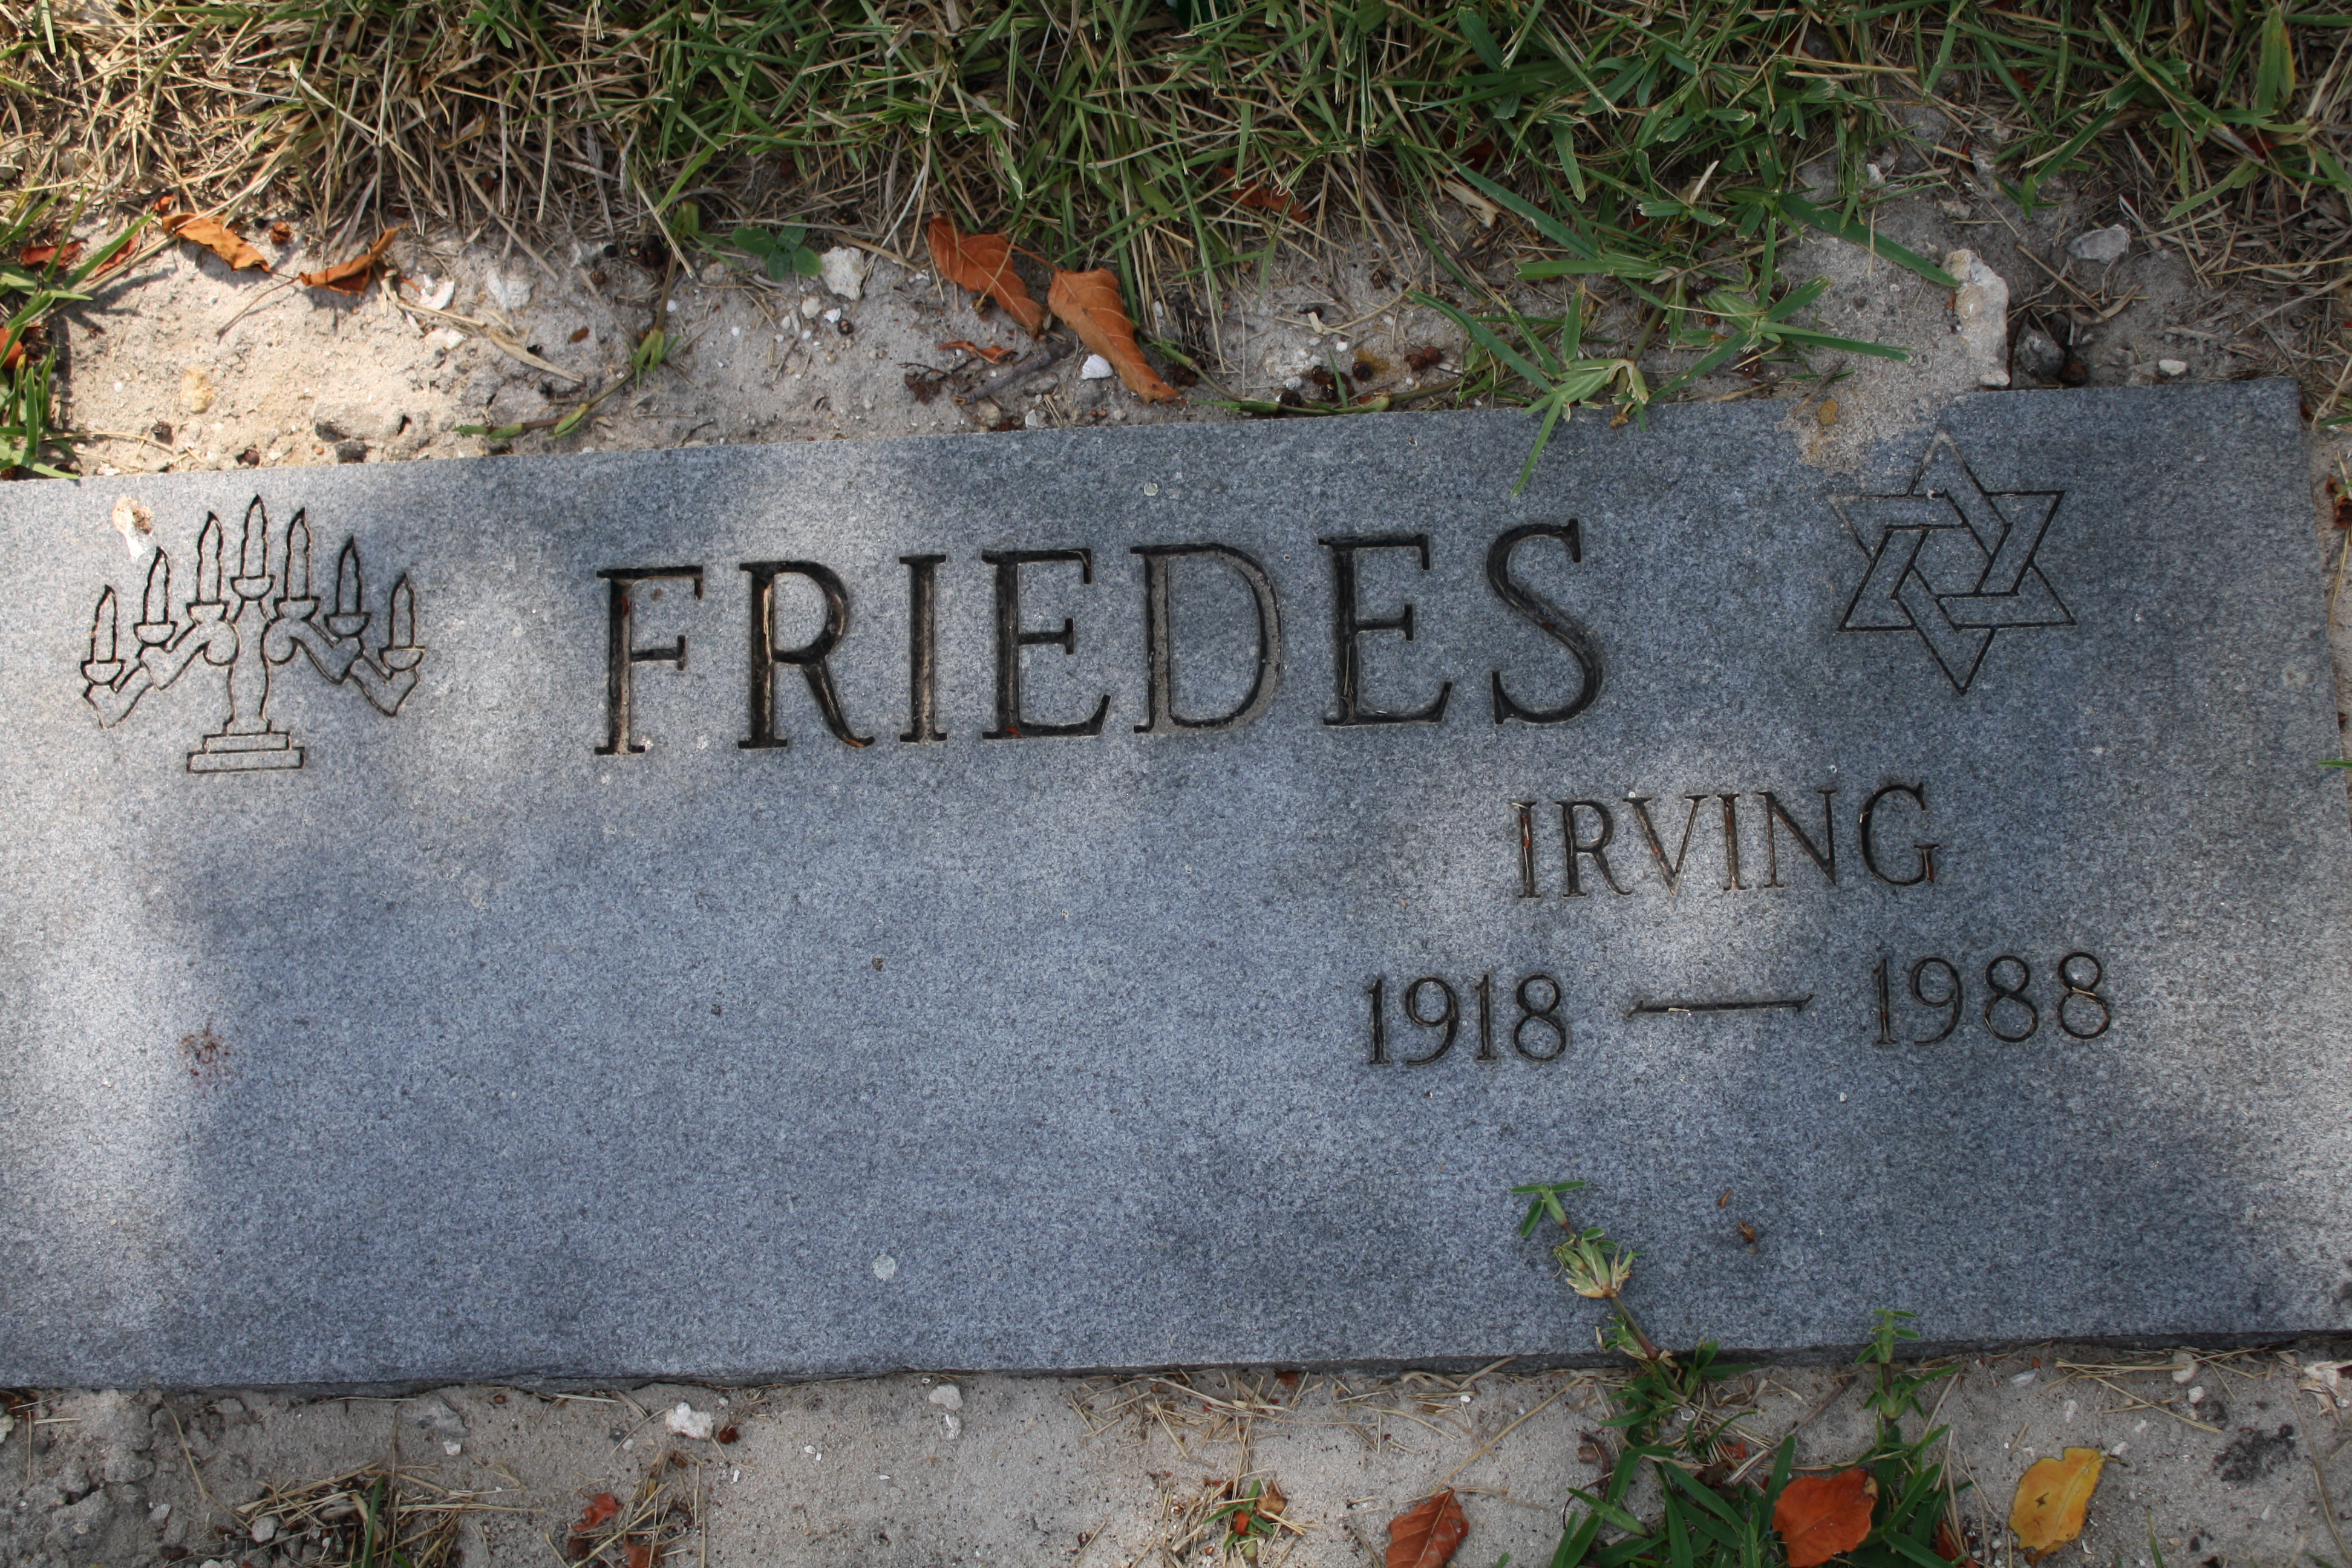 Irving Friedes